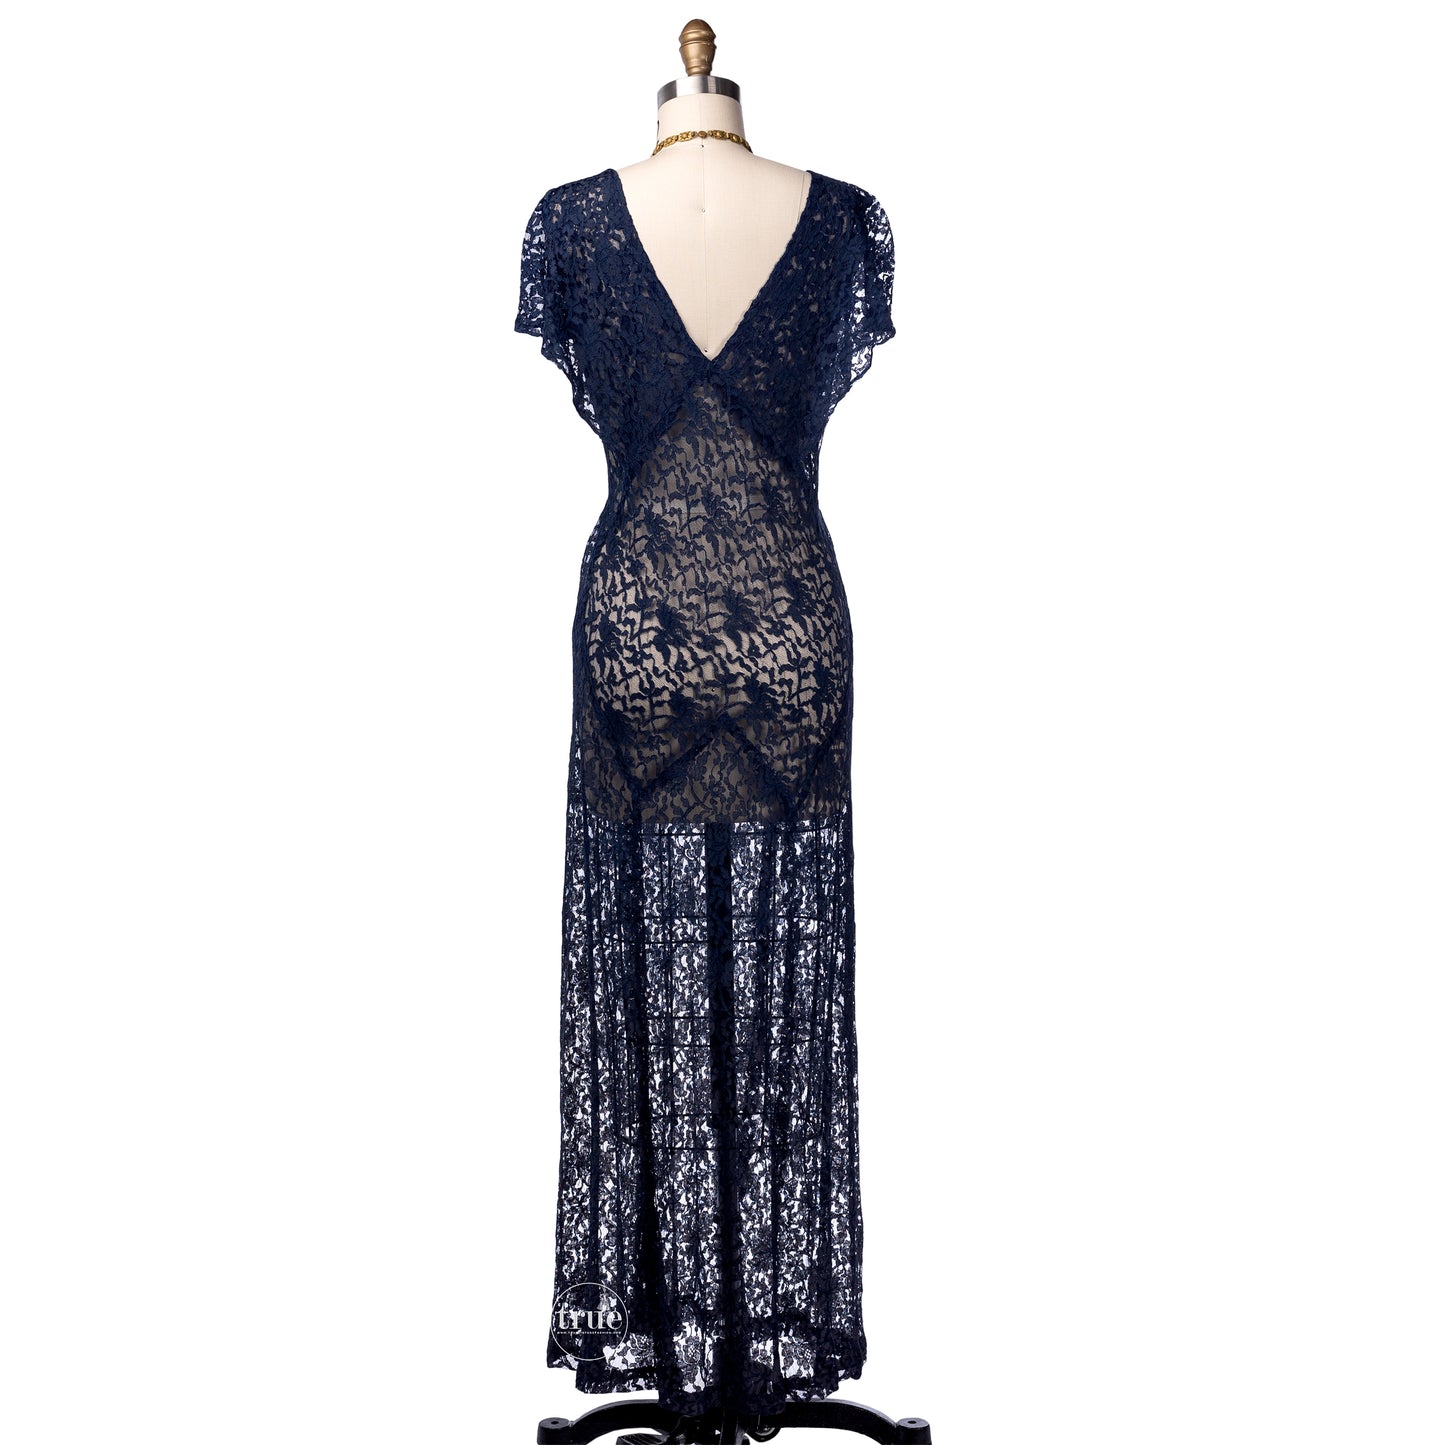 vintage 1930's dress ...gorgeous blue lace long dress with slip sleeve jacket